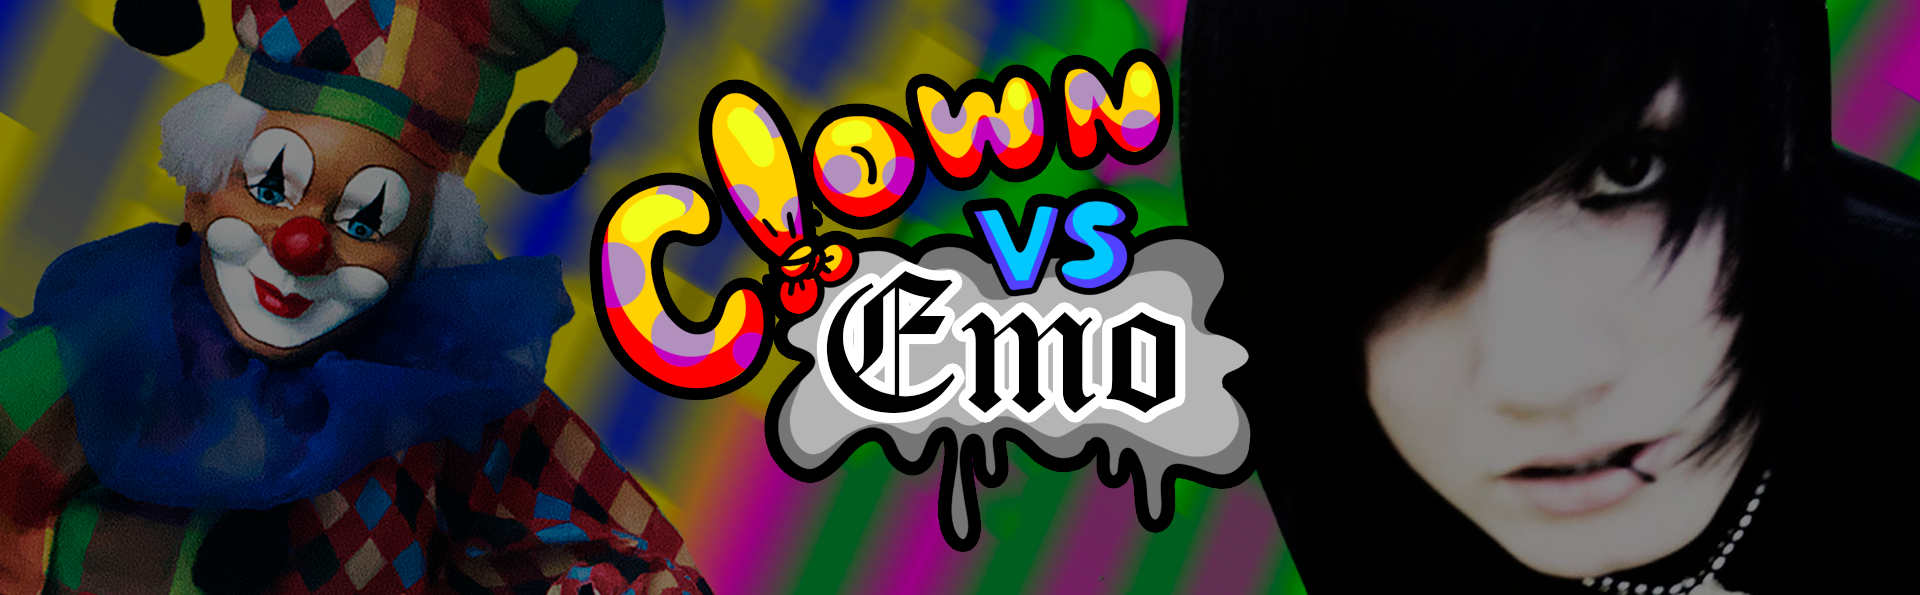 Clown vs Emo